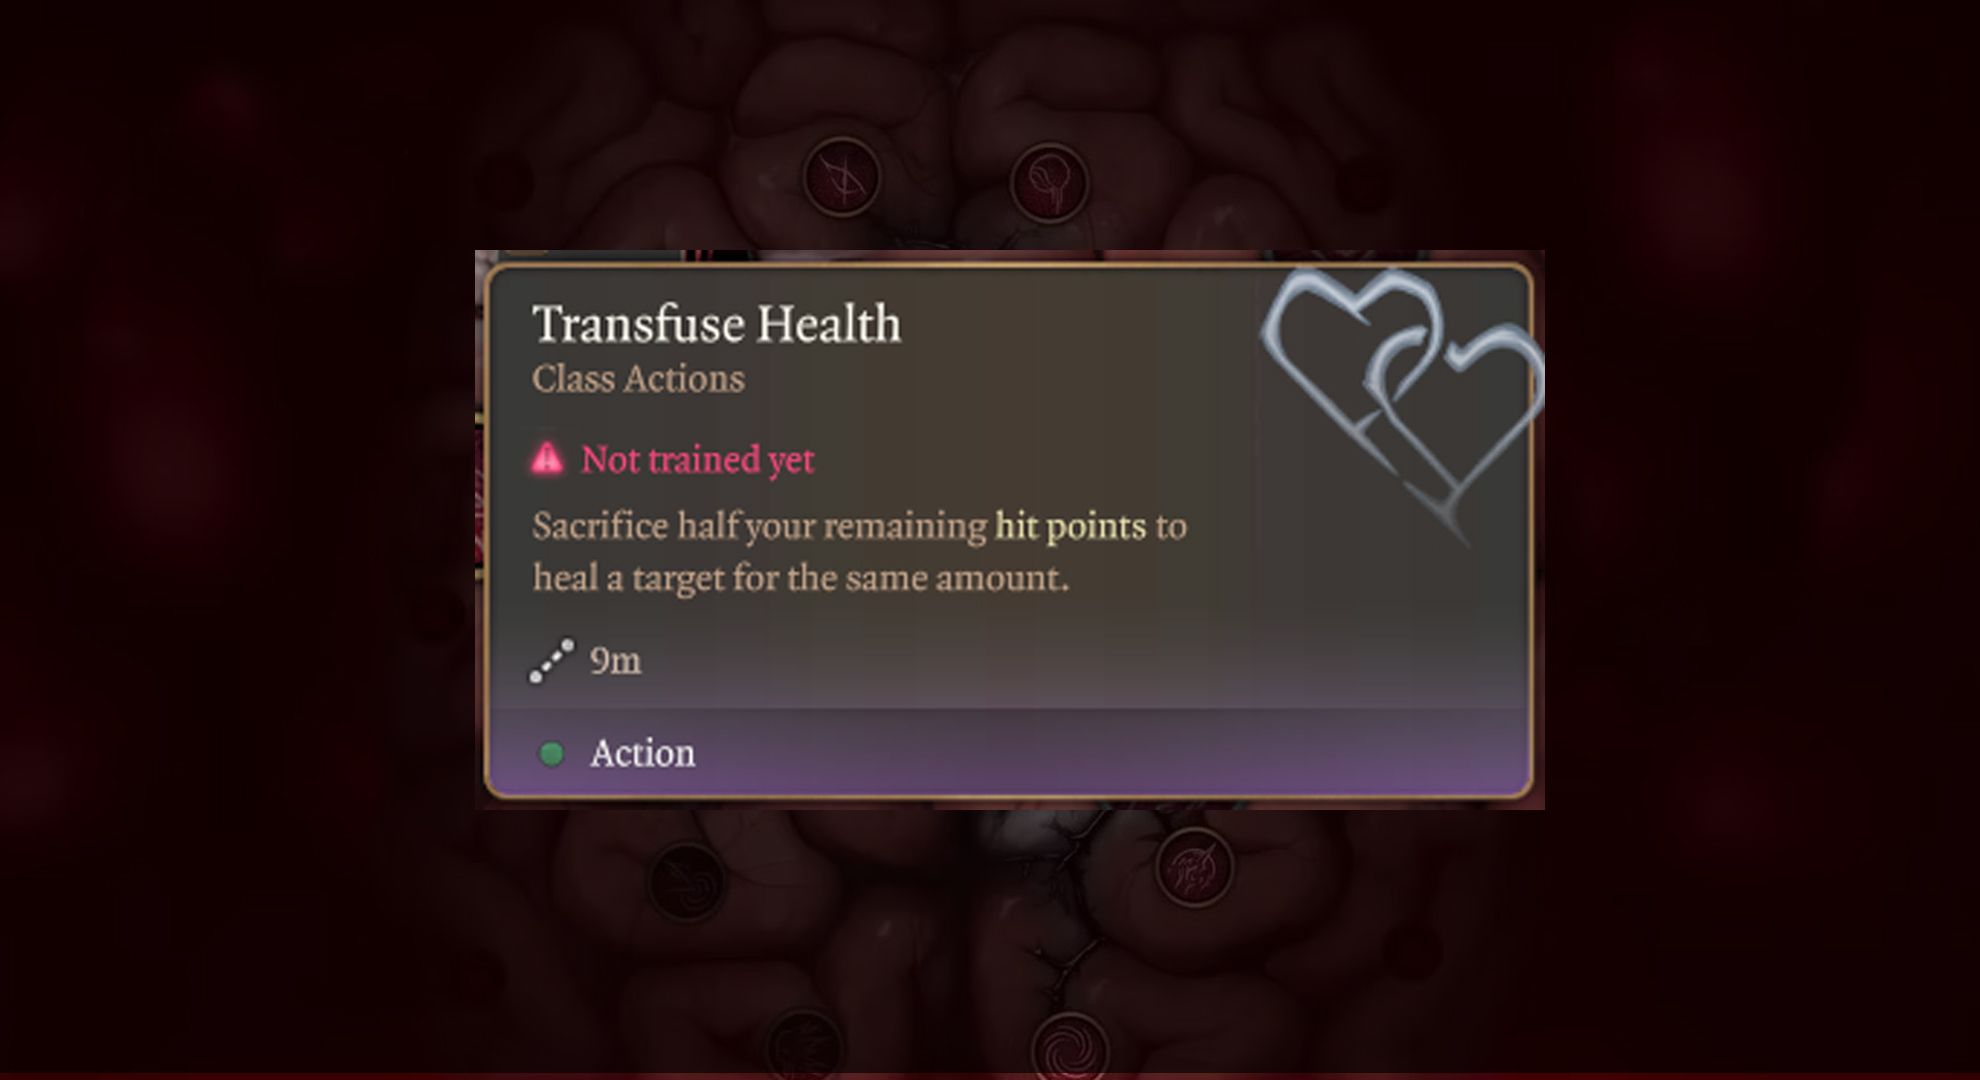 Transfuse Health